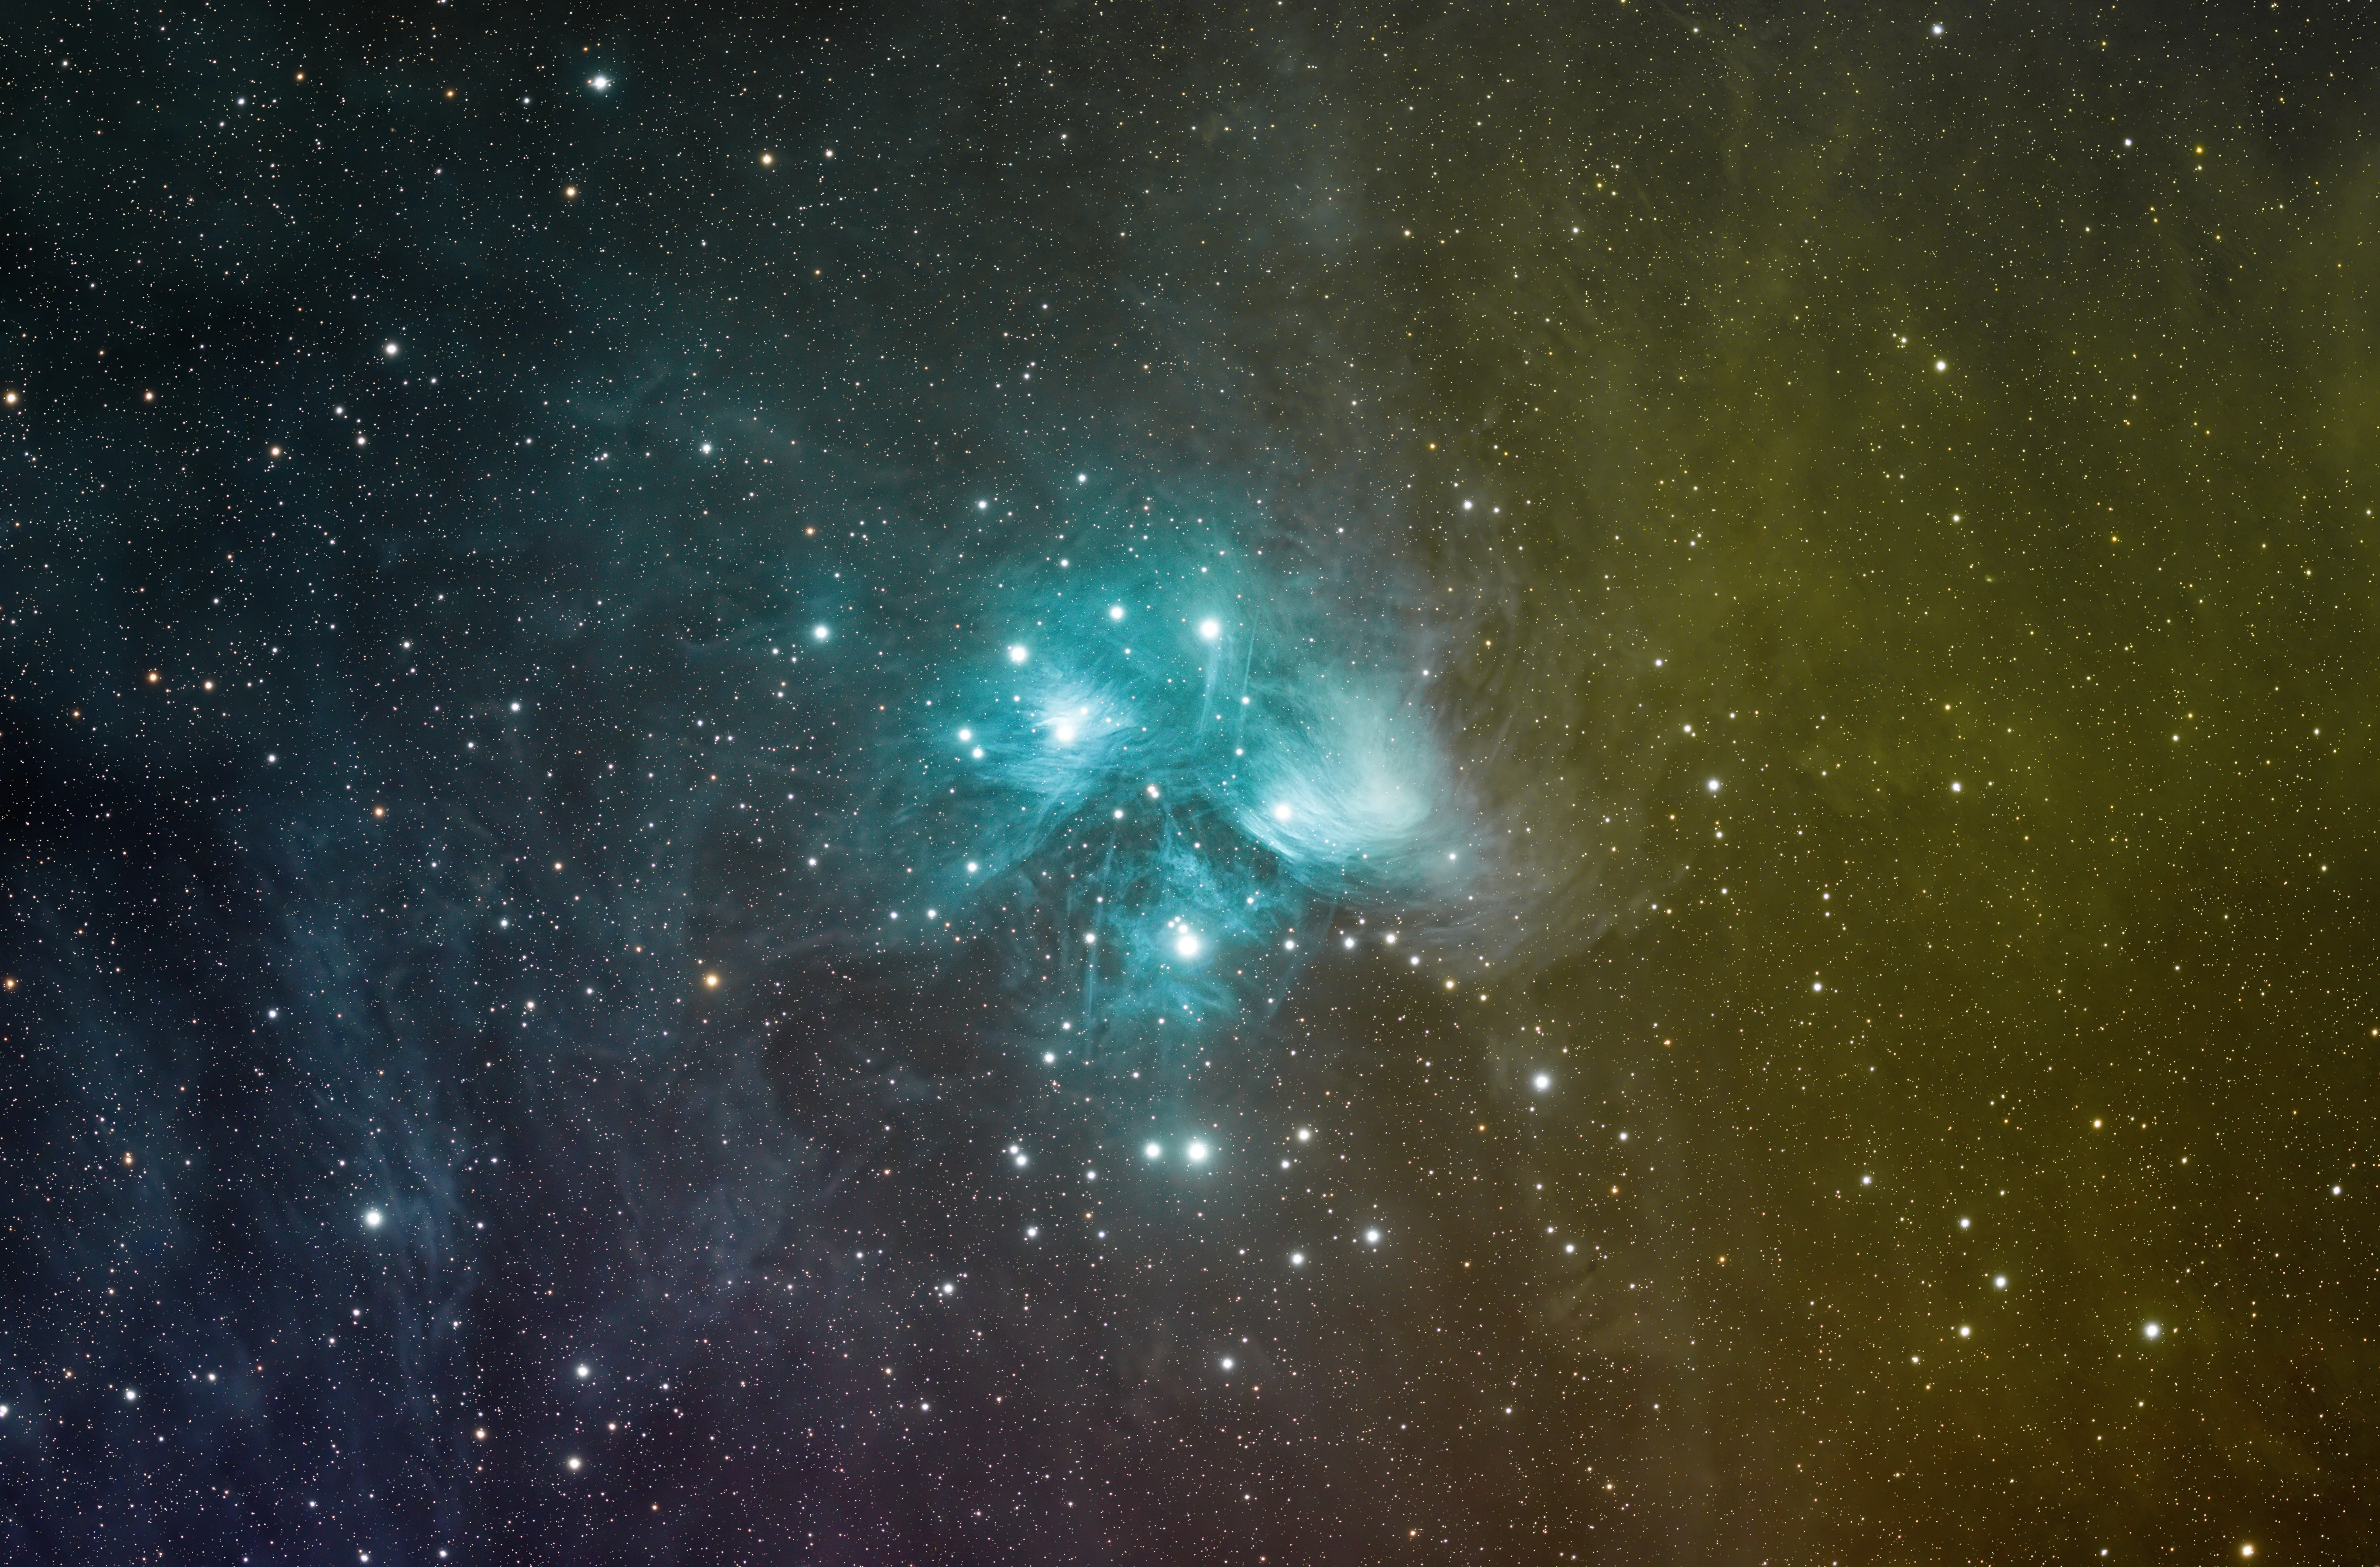 M45 Pleiades astrophoto with the Sharpstar 61EDPH III refractor